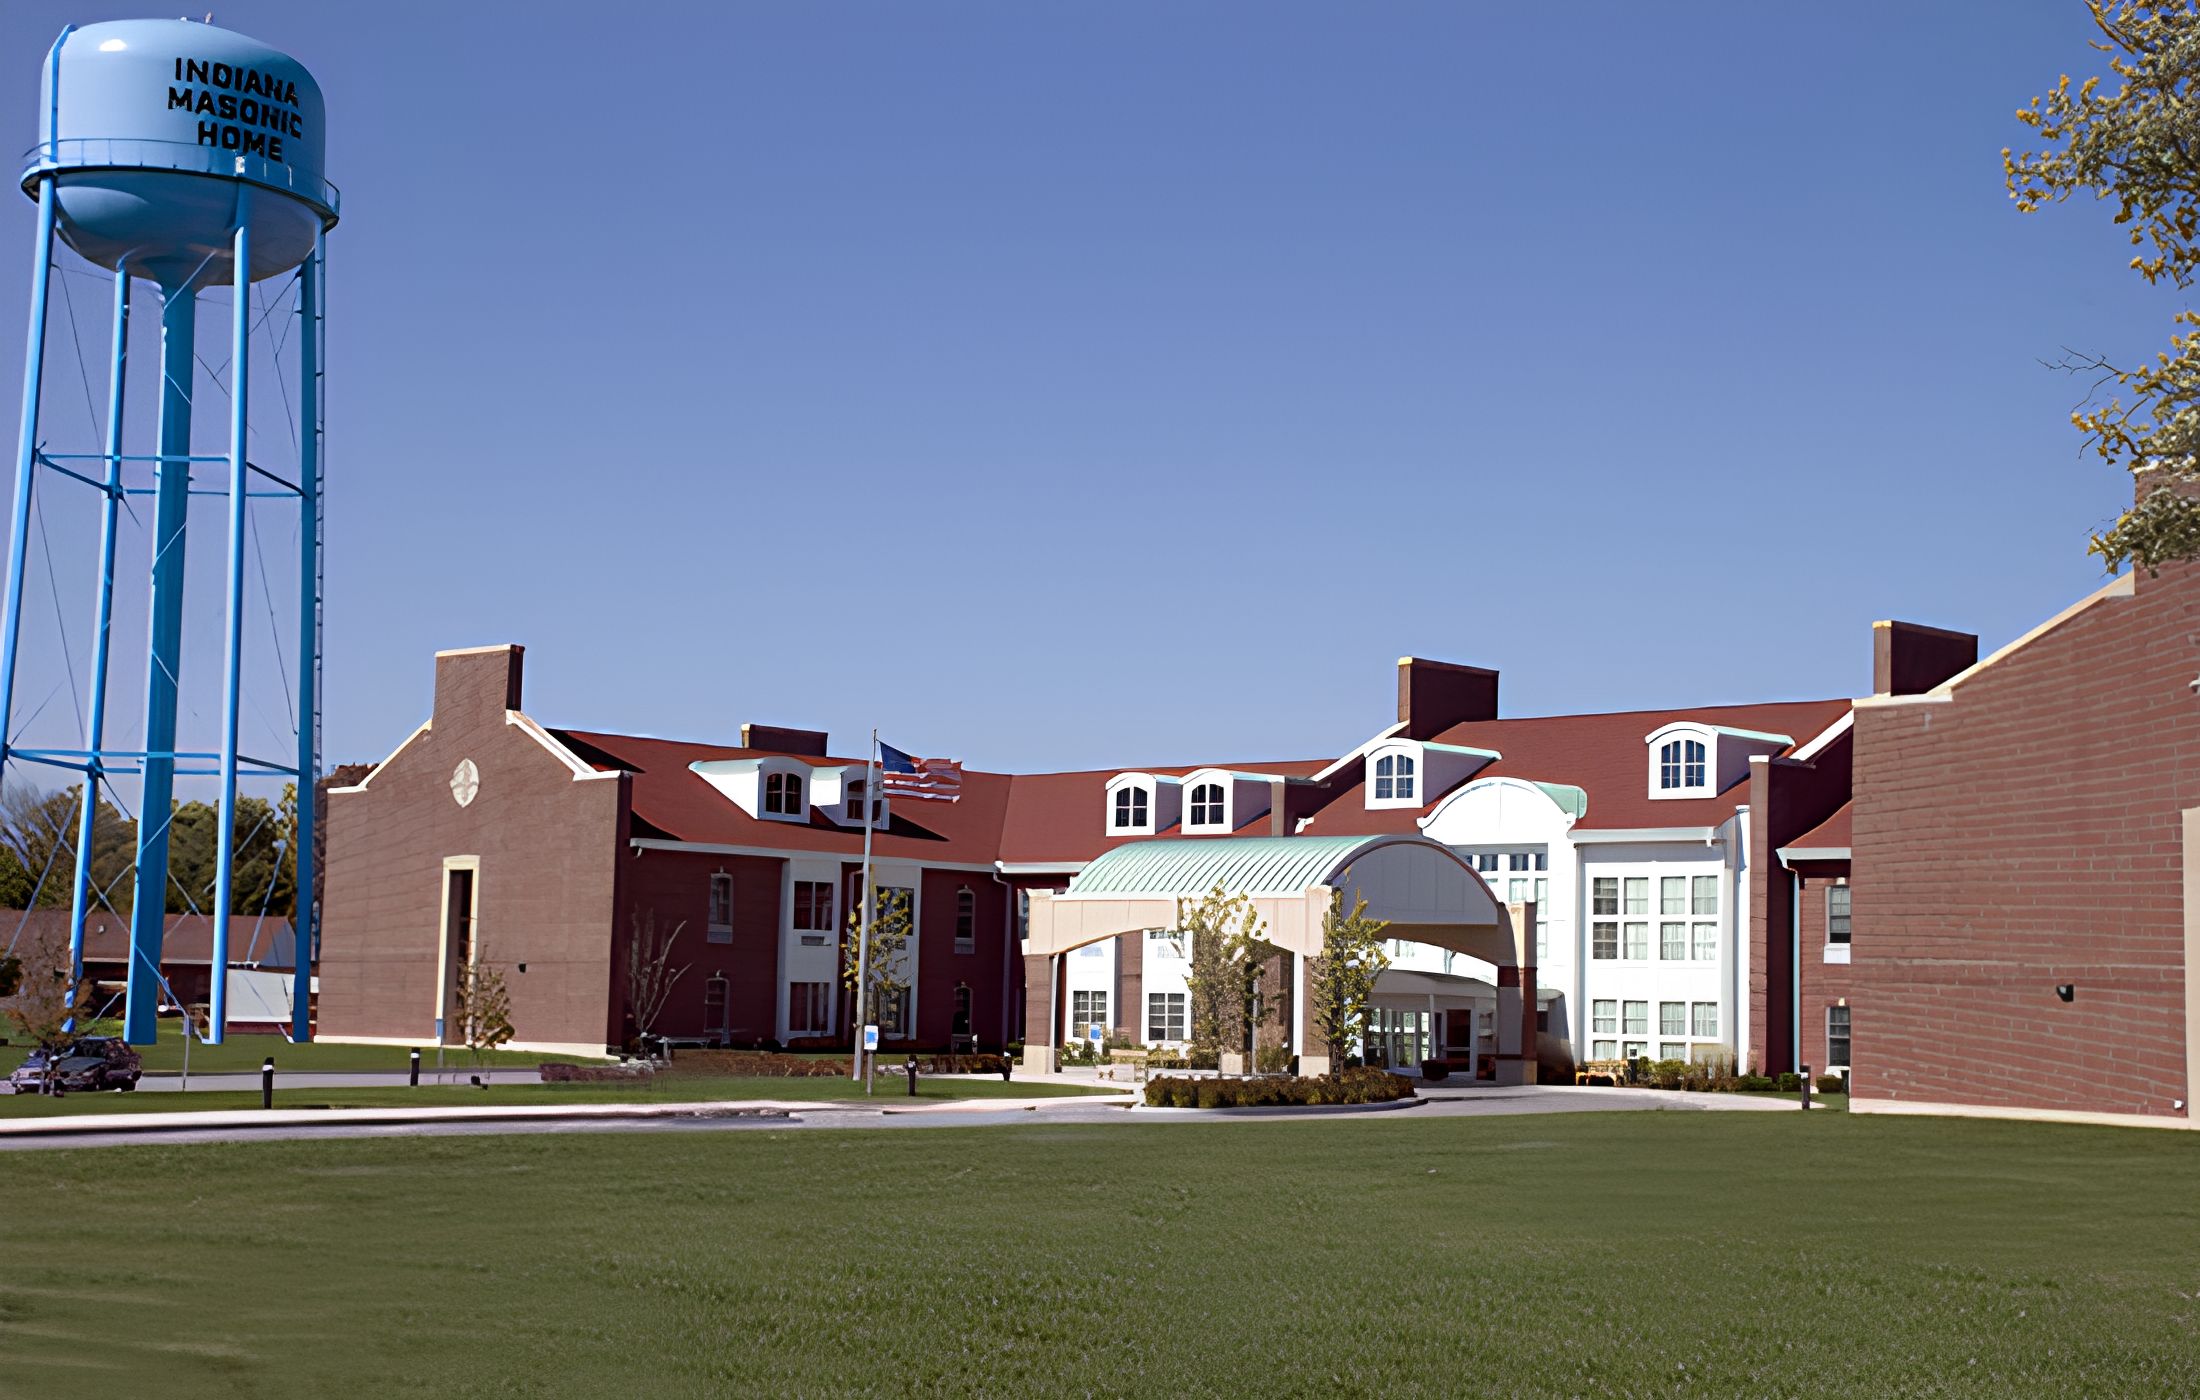 Indiana Masonic Home Health Center 2